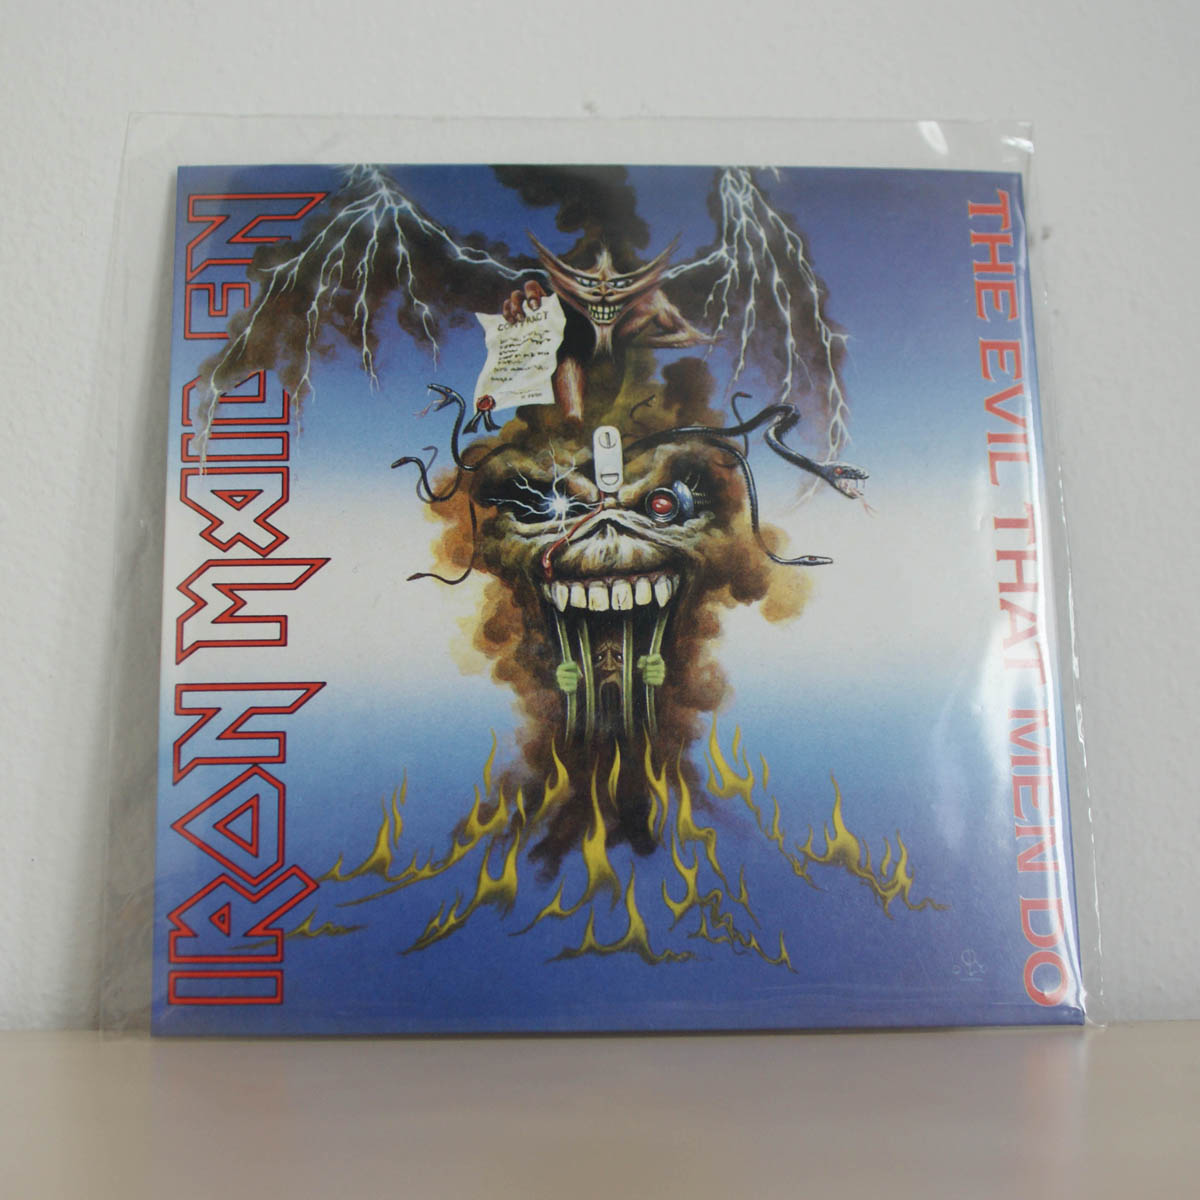 Iron Maiden - The Evil That Men Do - Iron Maiden Collector